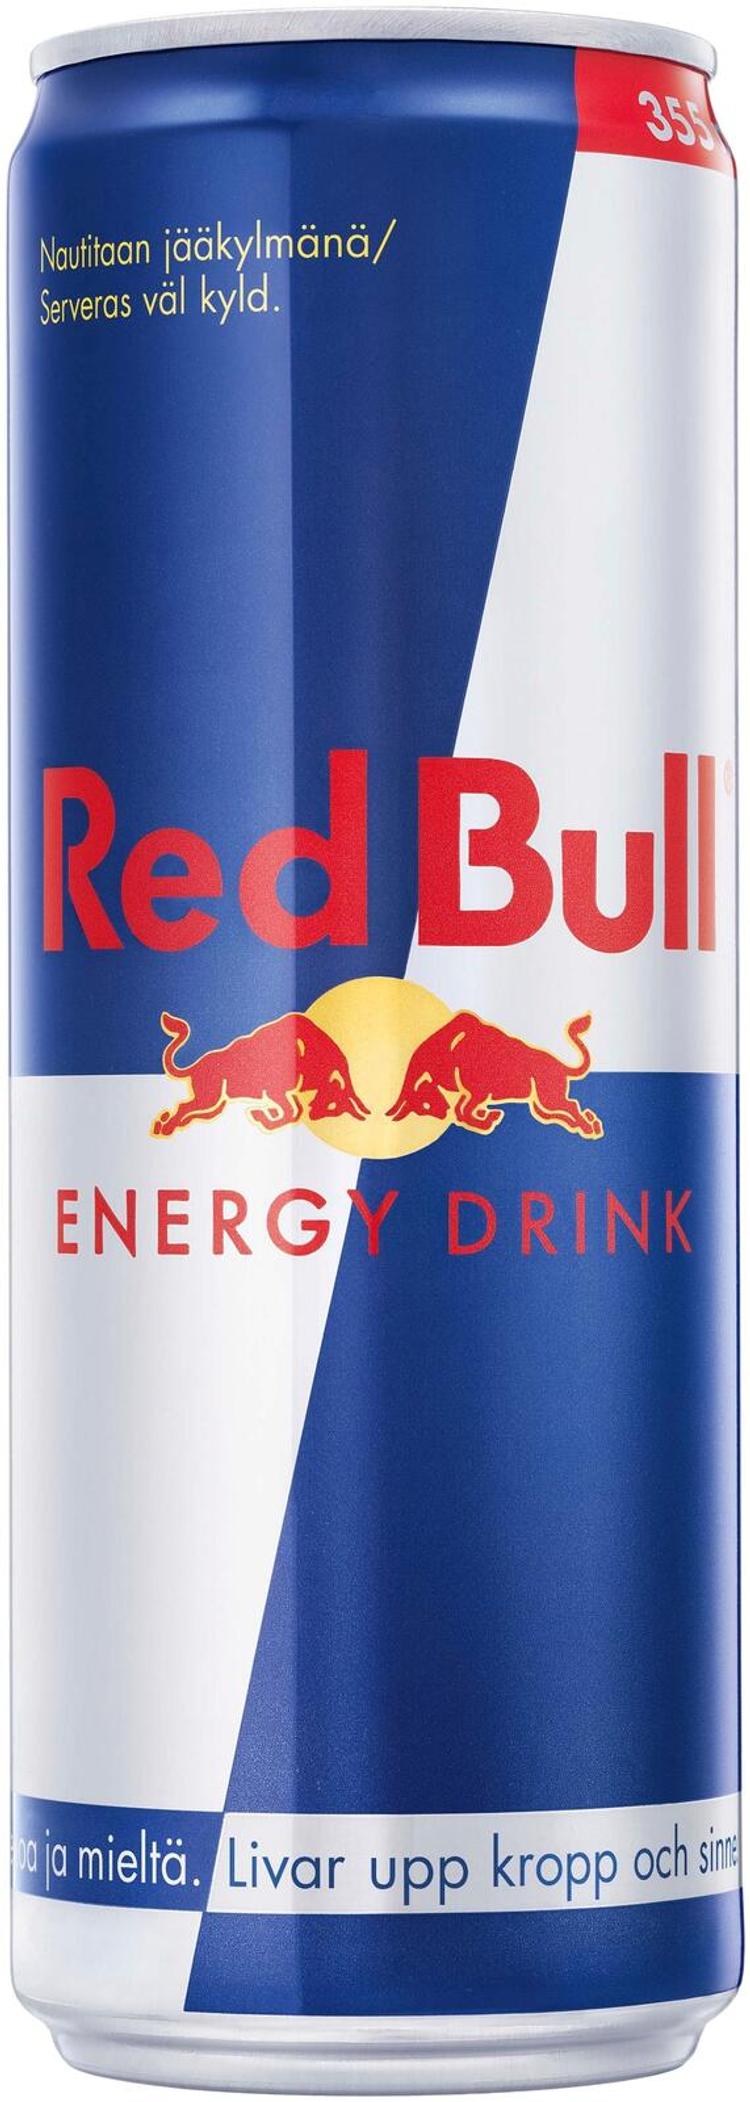 Red Bull Energiajuoma 0,355l